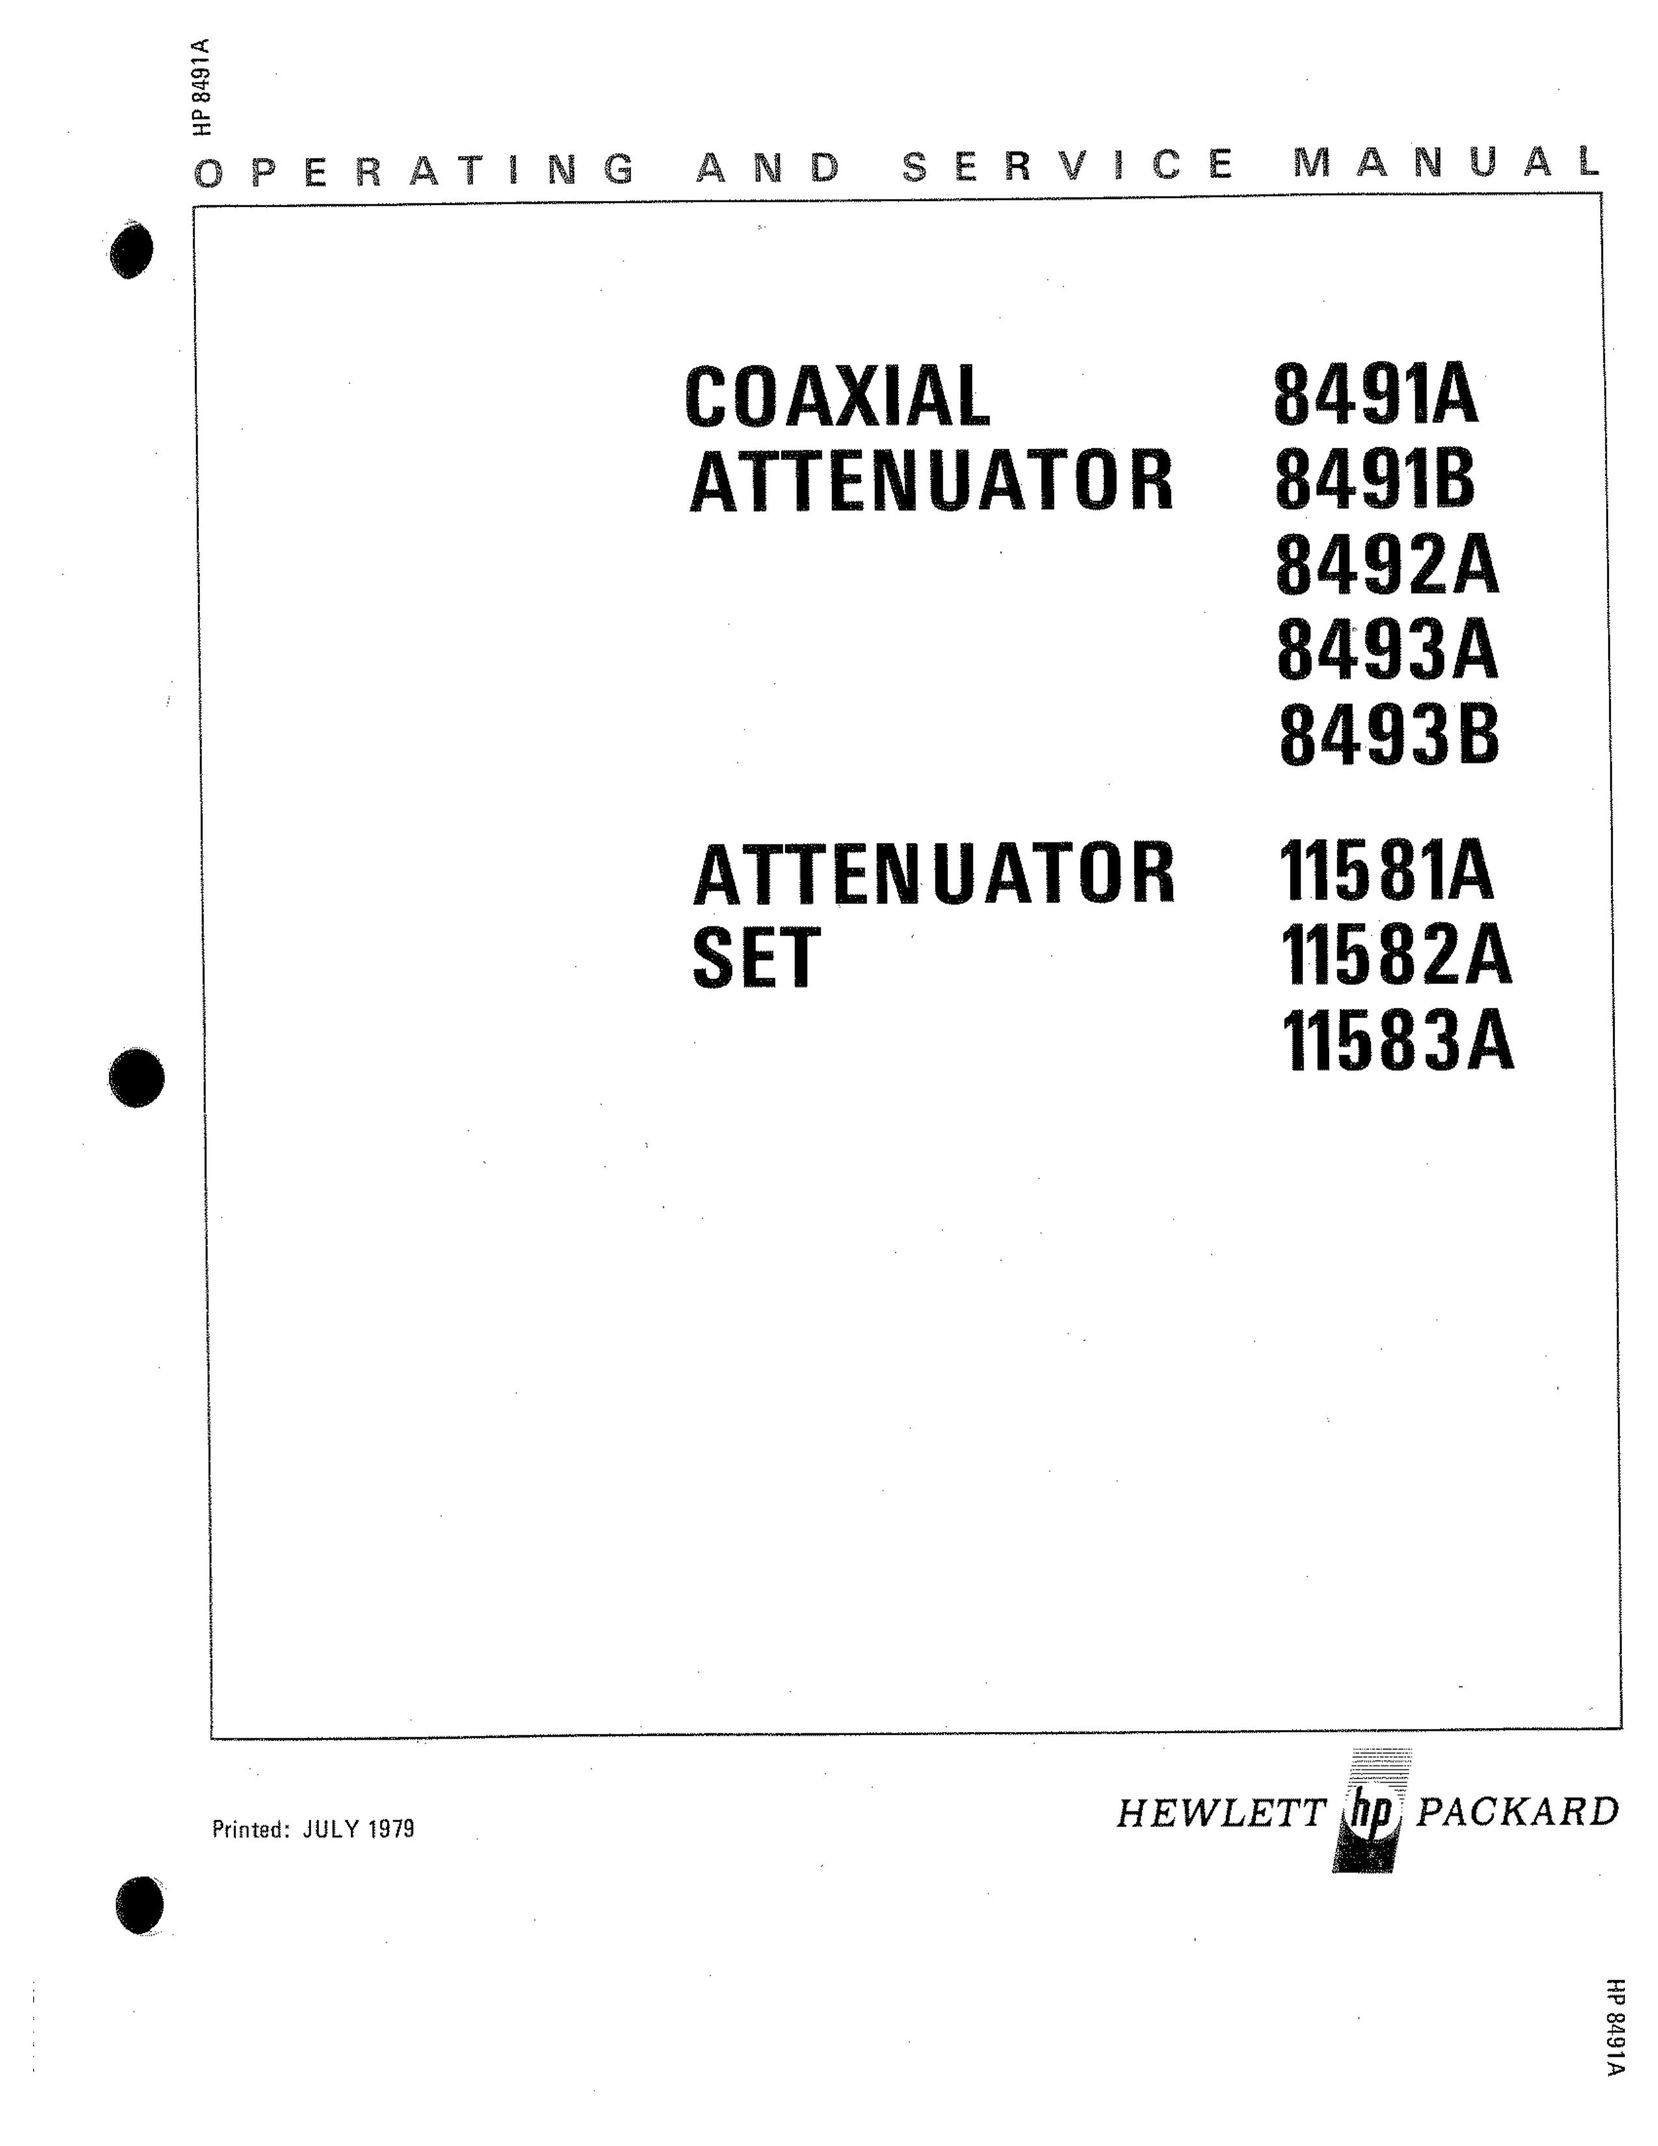 HP (Hewlett-Packard) 8492B TV Cables User Manual